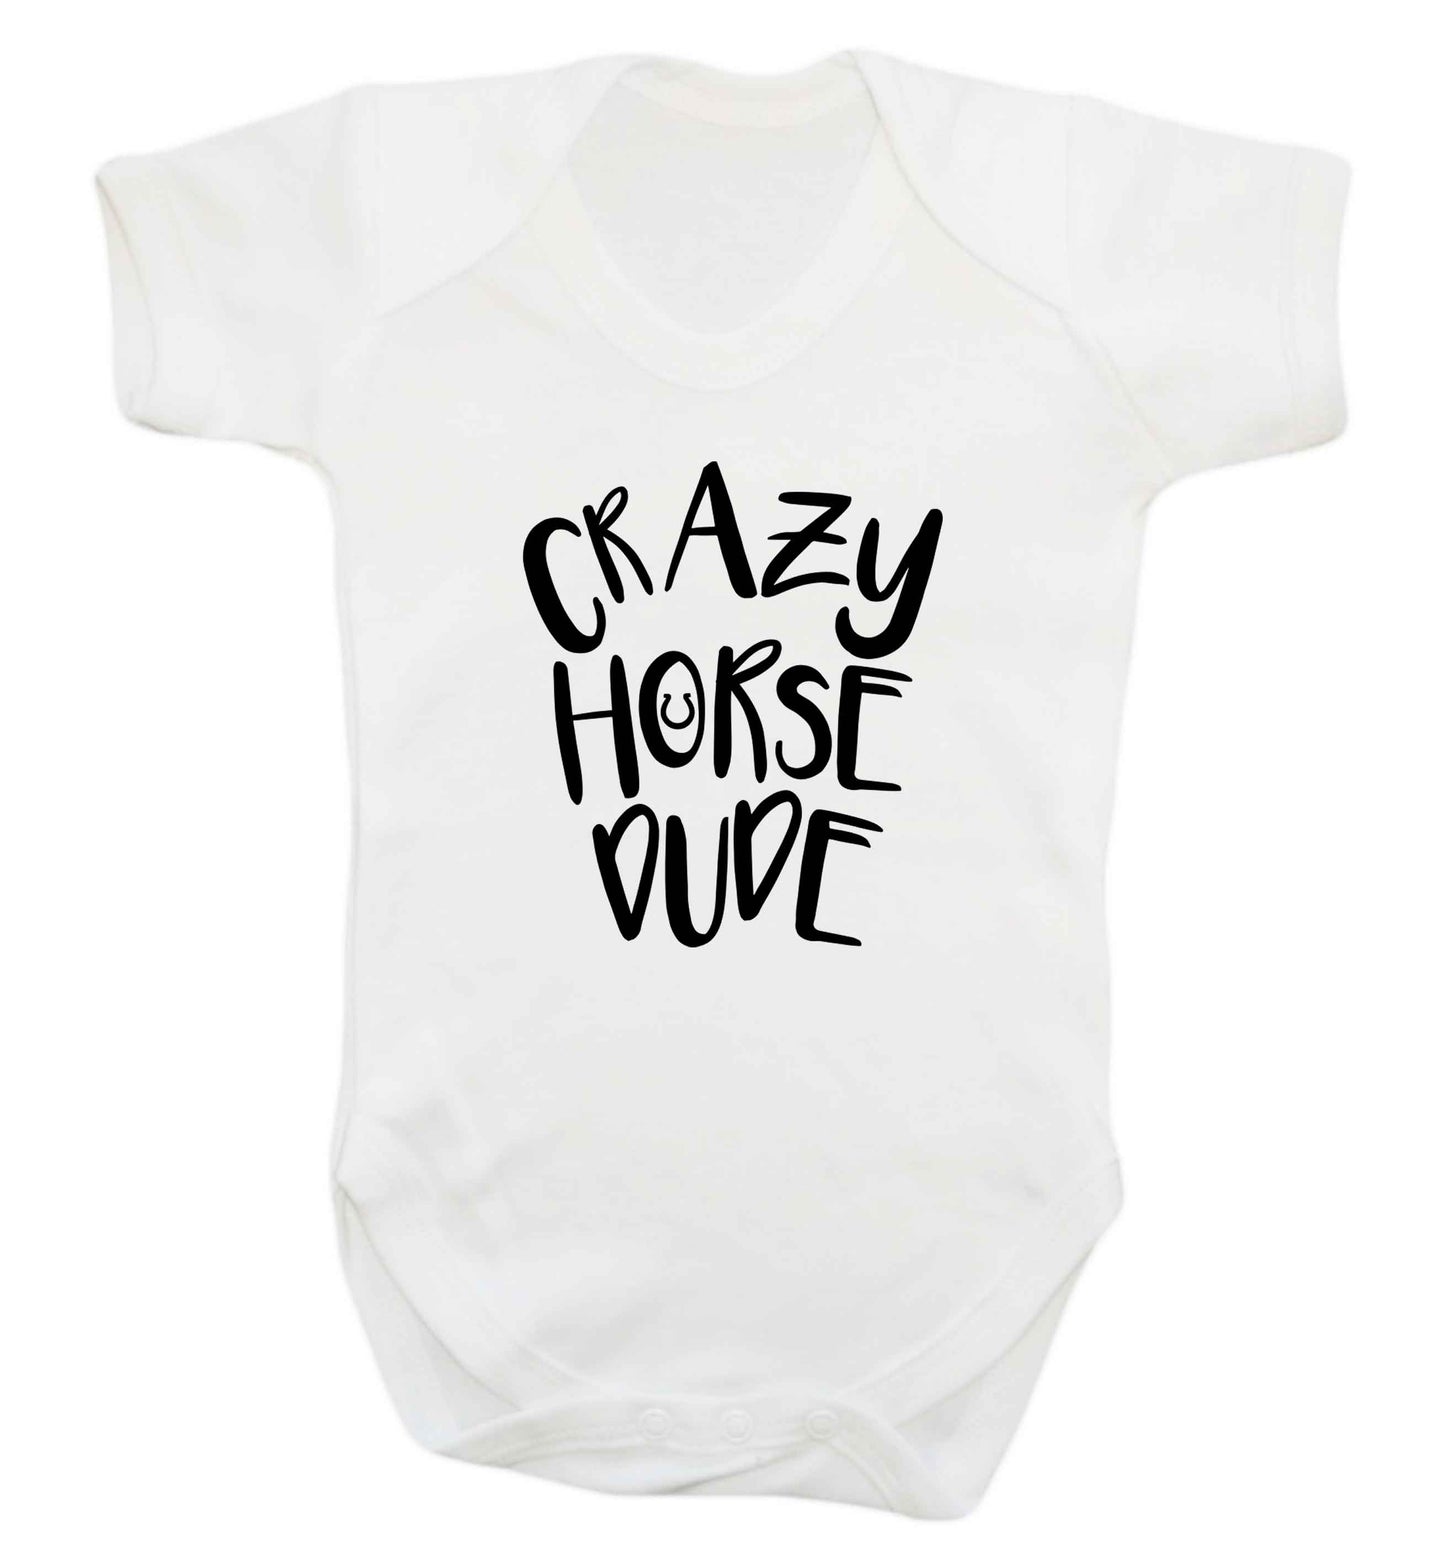 Crazy horse dude baby vest white 18-24 months